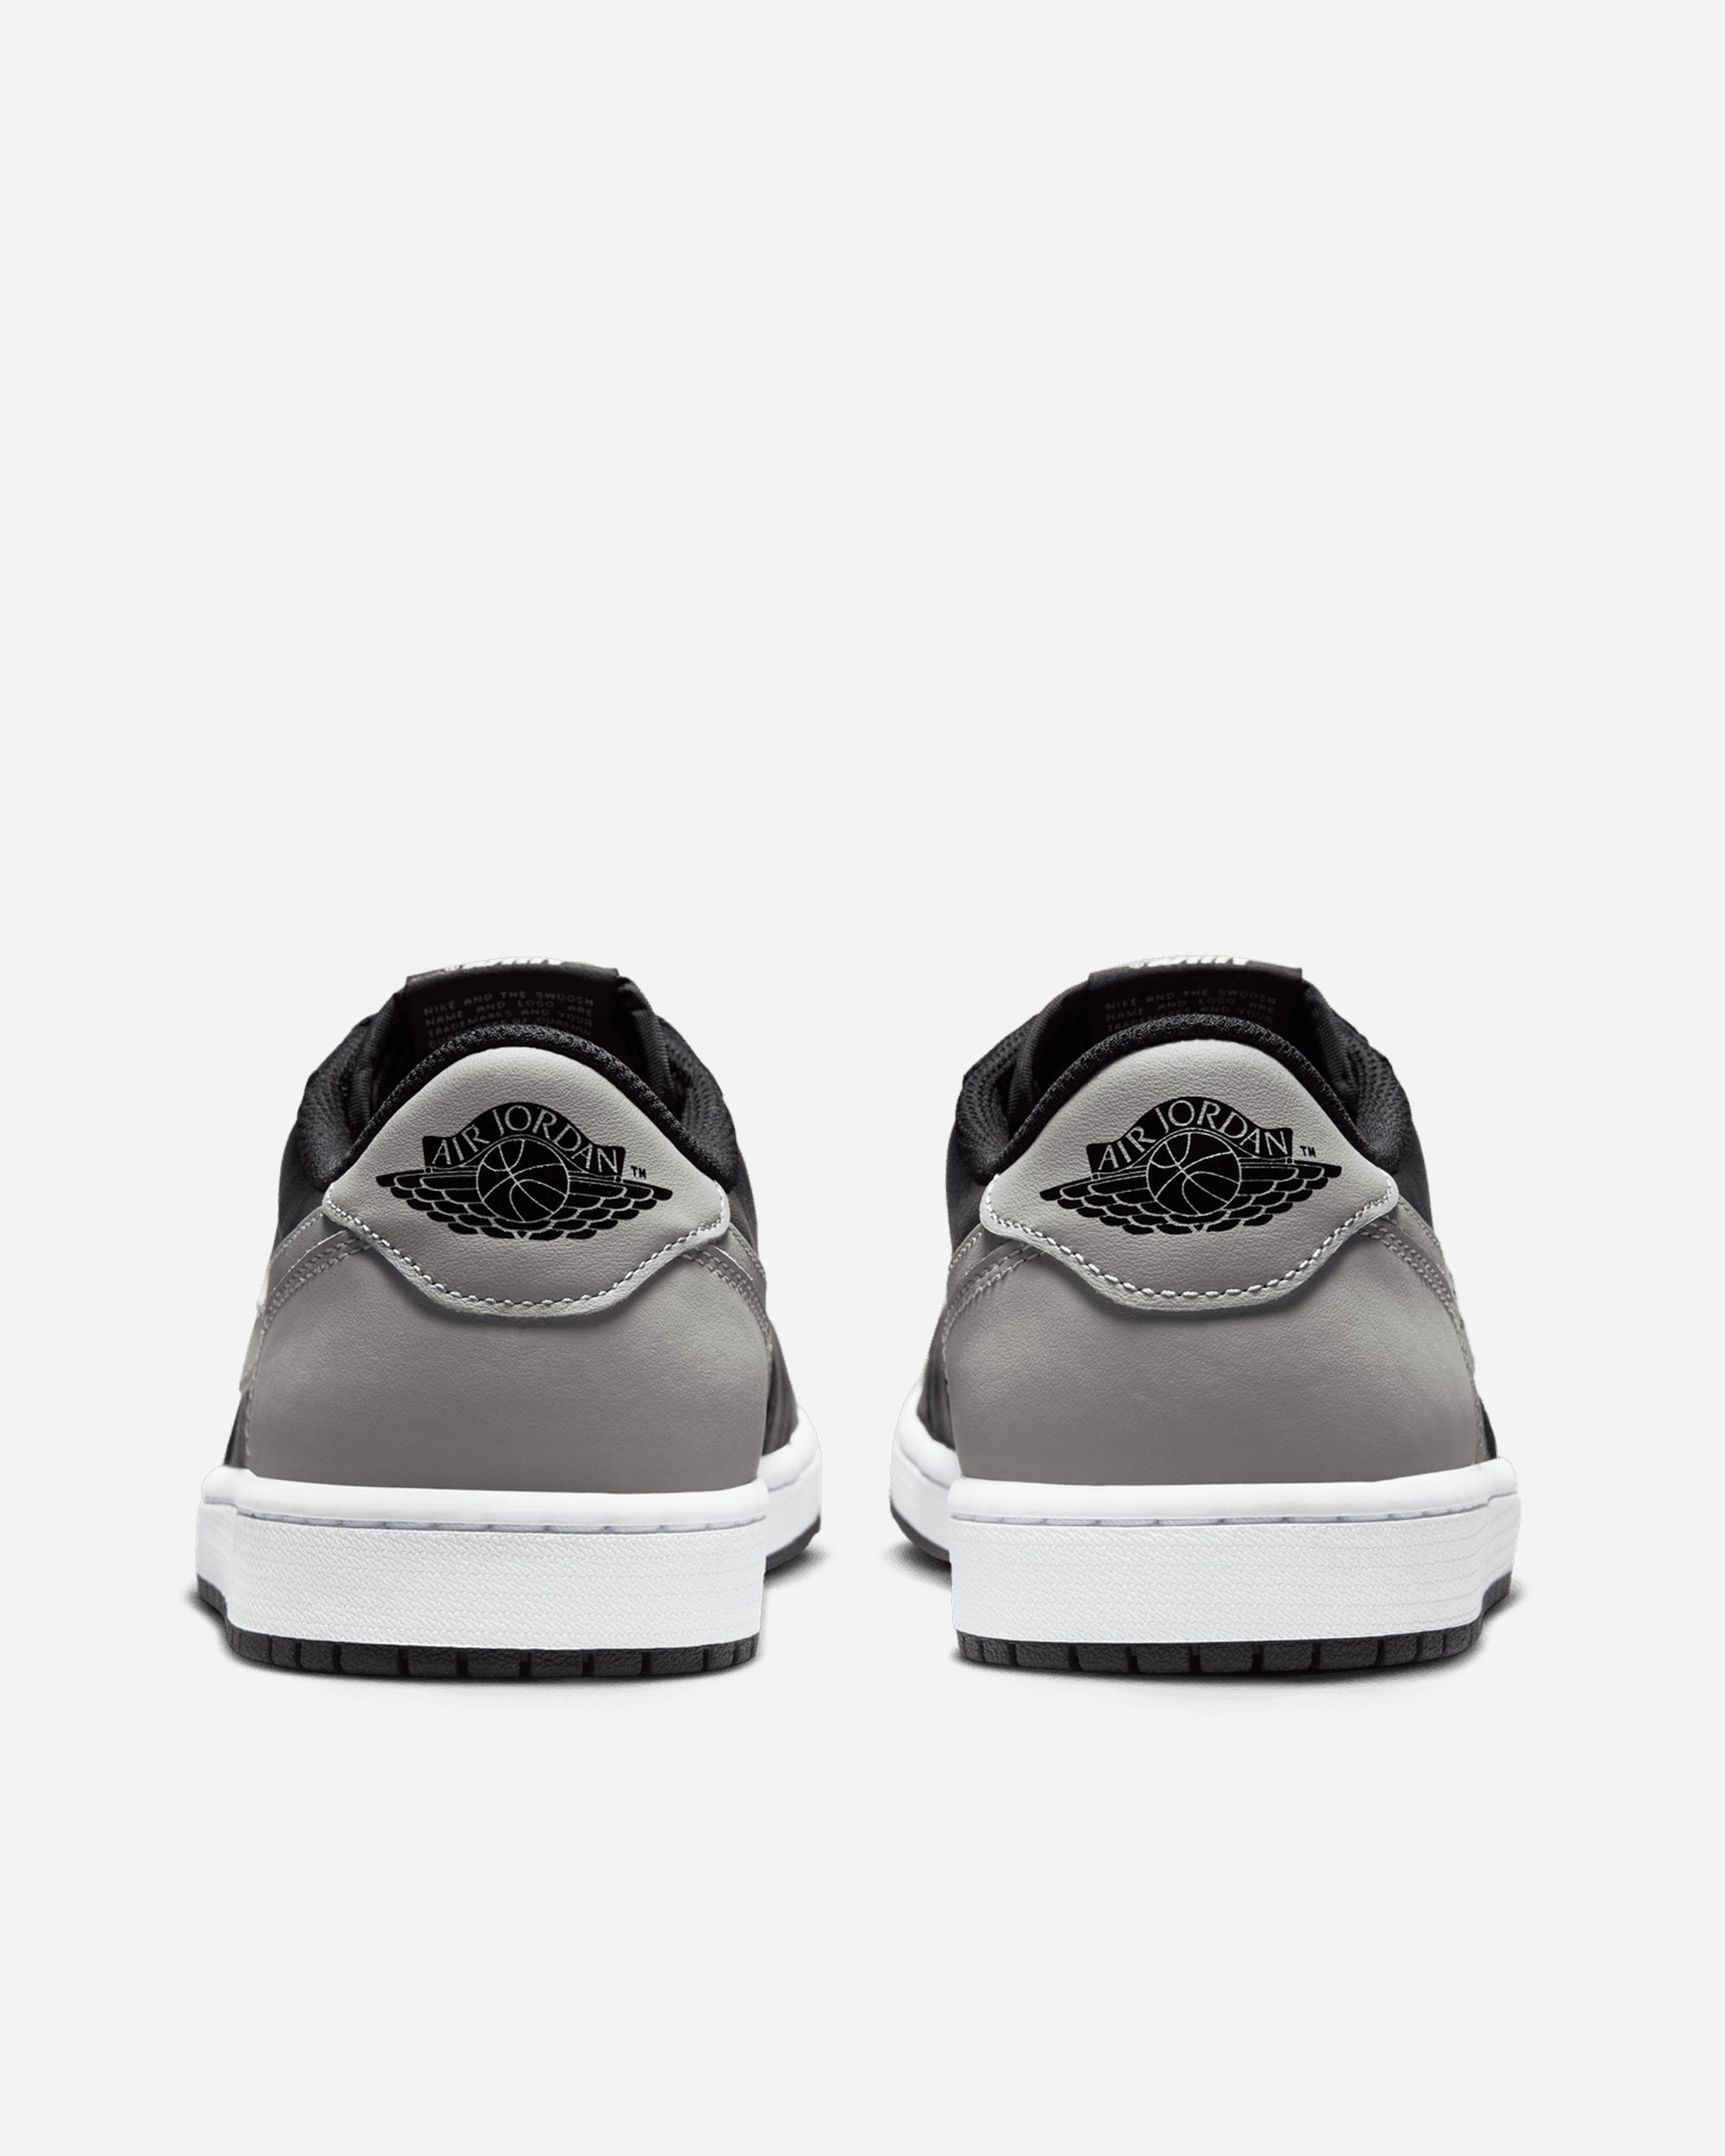 Jordan Brand Air Jordan 1 Low 'Shadow' BLACK/MEDIUM GREY-WHITE CZ0790-003